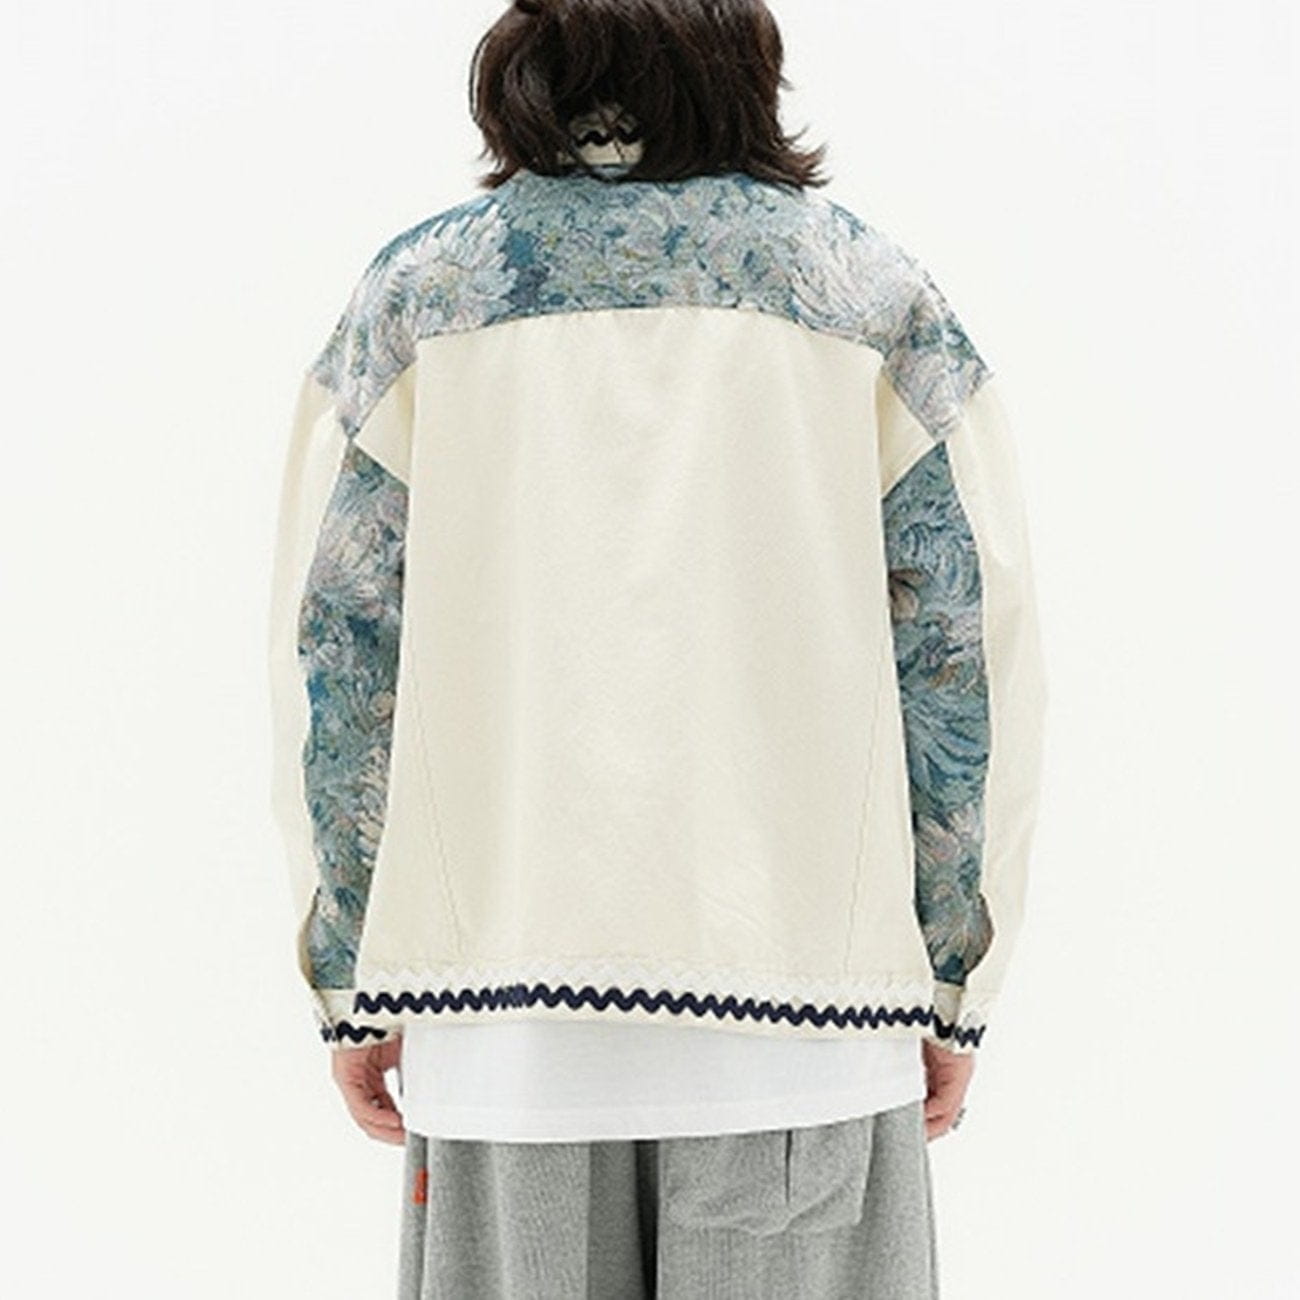 Majesda® - Vintage Embroidery Patchwork Jacket outfit ideas, streetwear fashion - majesda.com